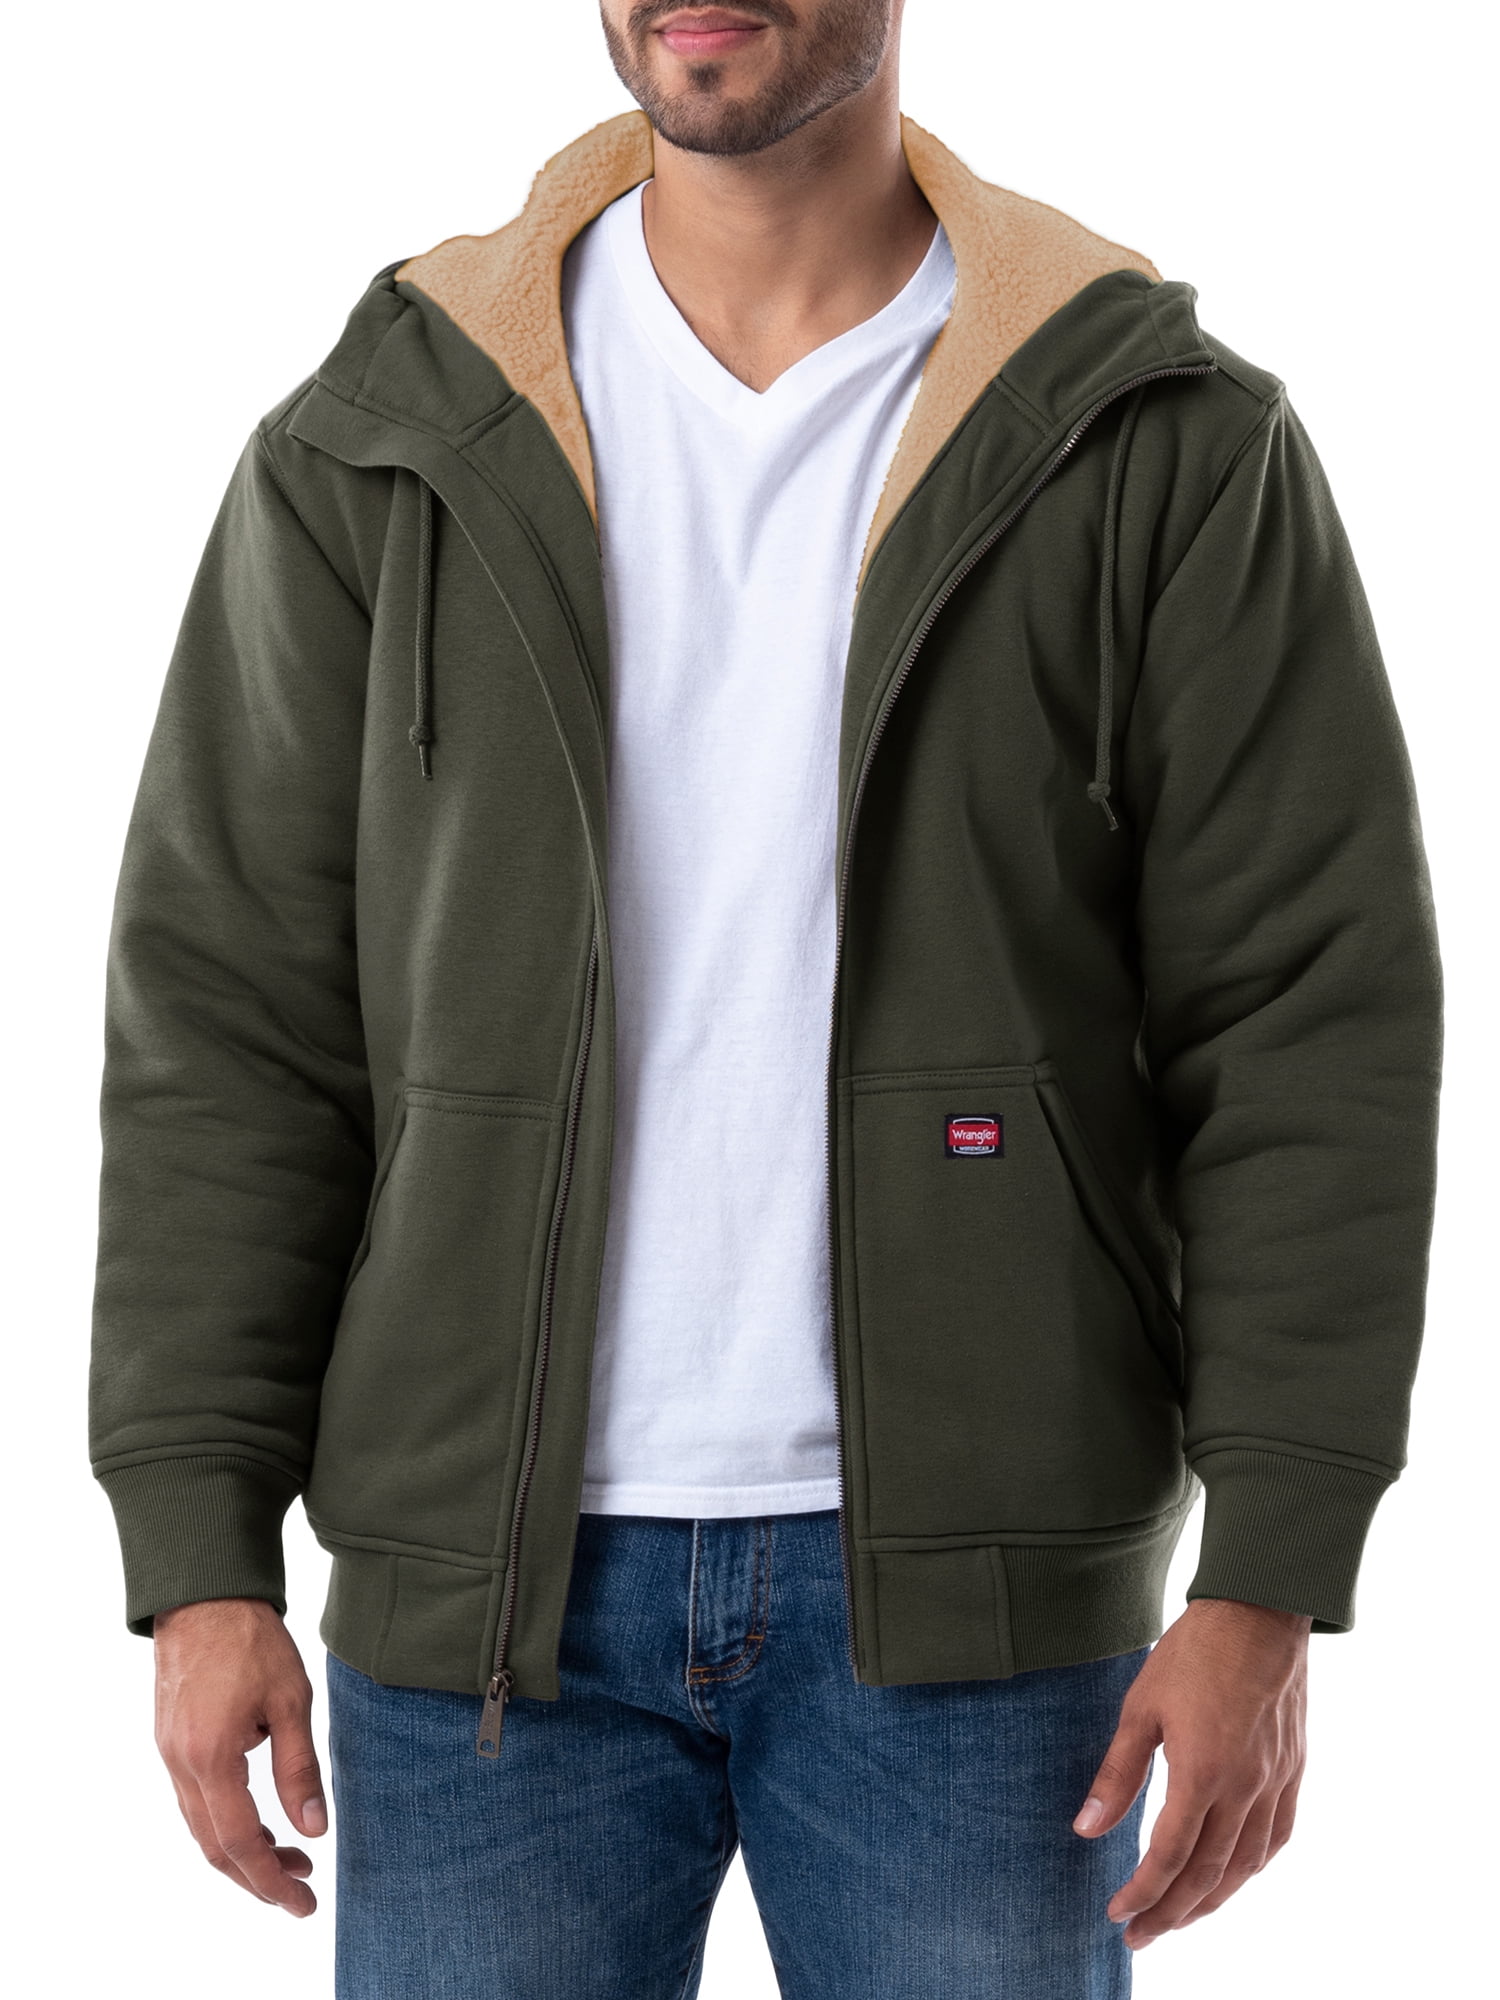 Arriba 30+ imagen wrangler workwear men’s full zip sherpa lined hooded sweatshirt